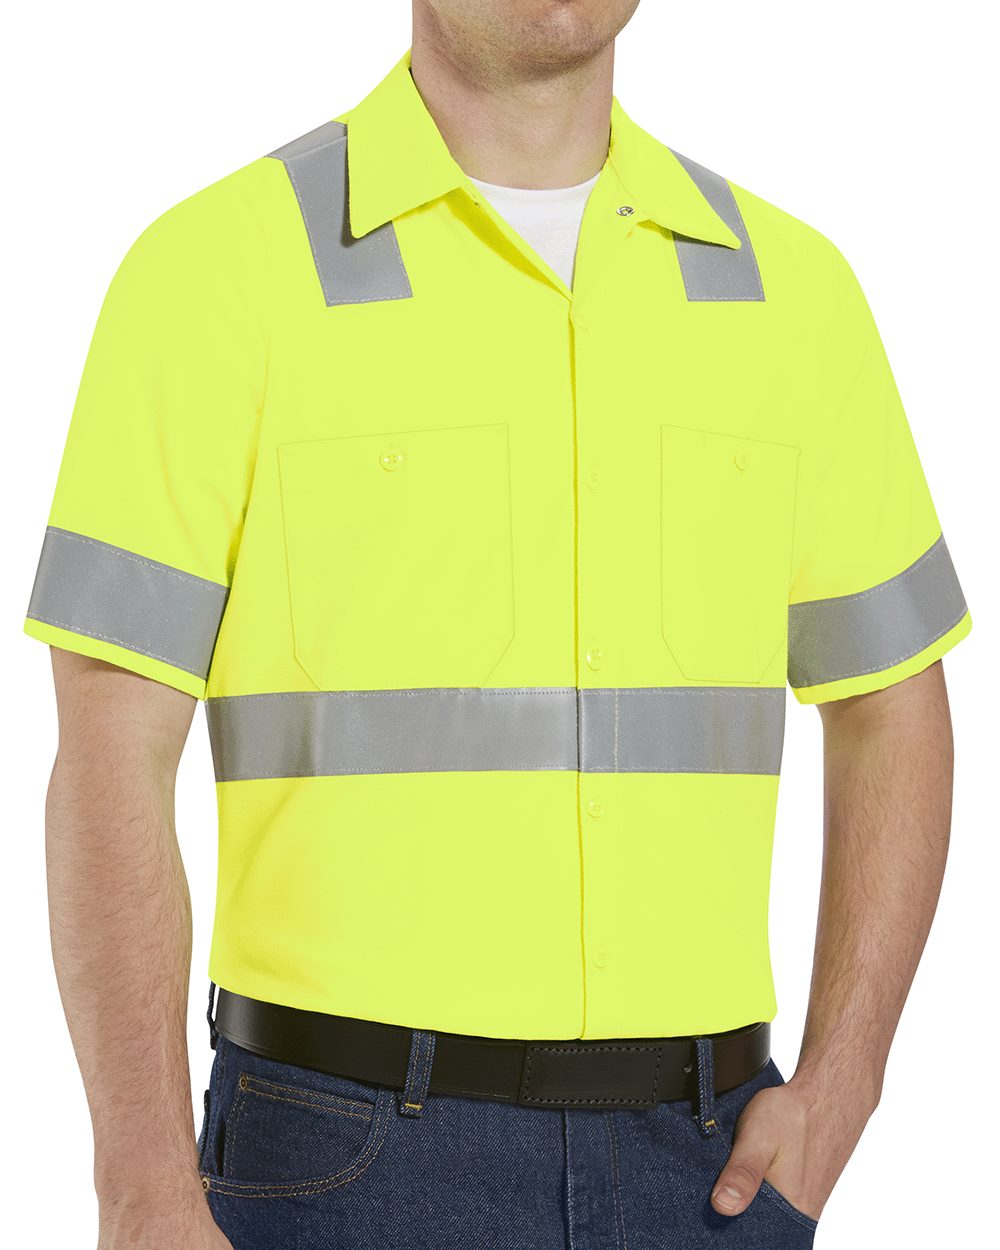 Red Kap Reflective Shirt Hi Vis Work Safety Uniform Yellow 2XL SS24HV #R